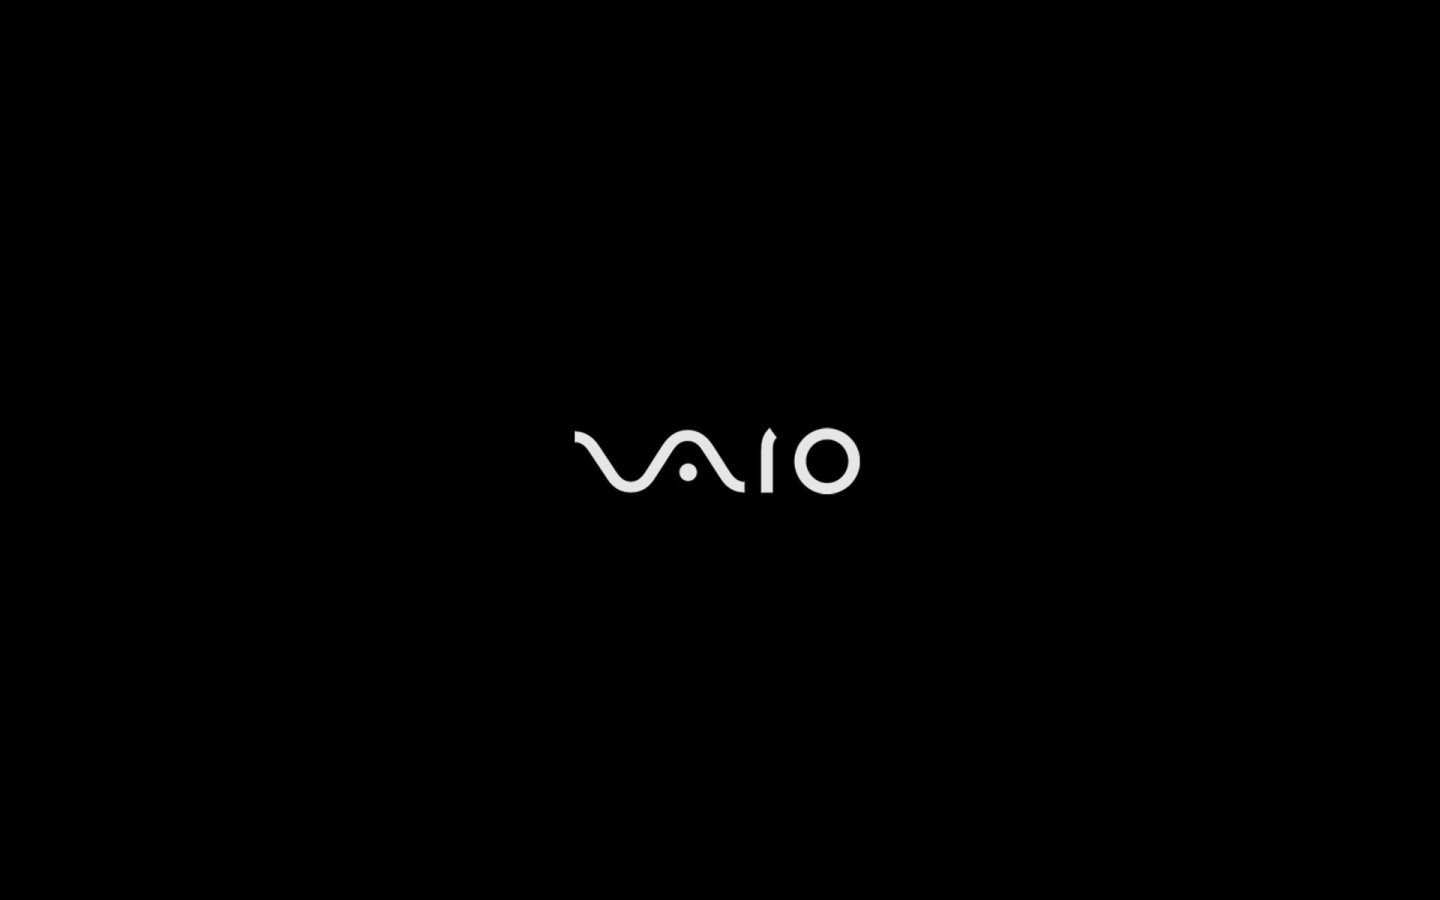 Vaio Black for 1440 x 900 widescreen resolution